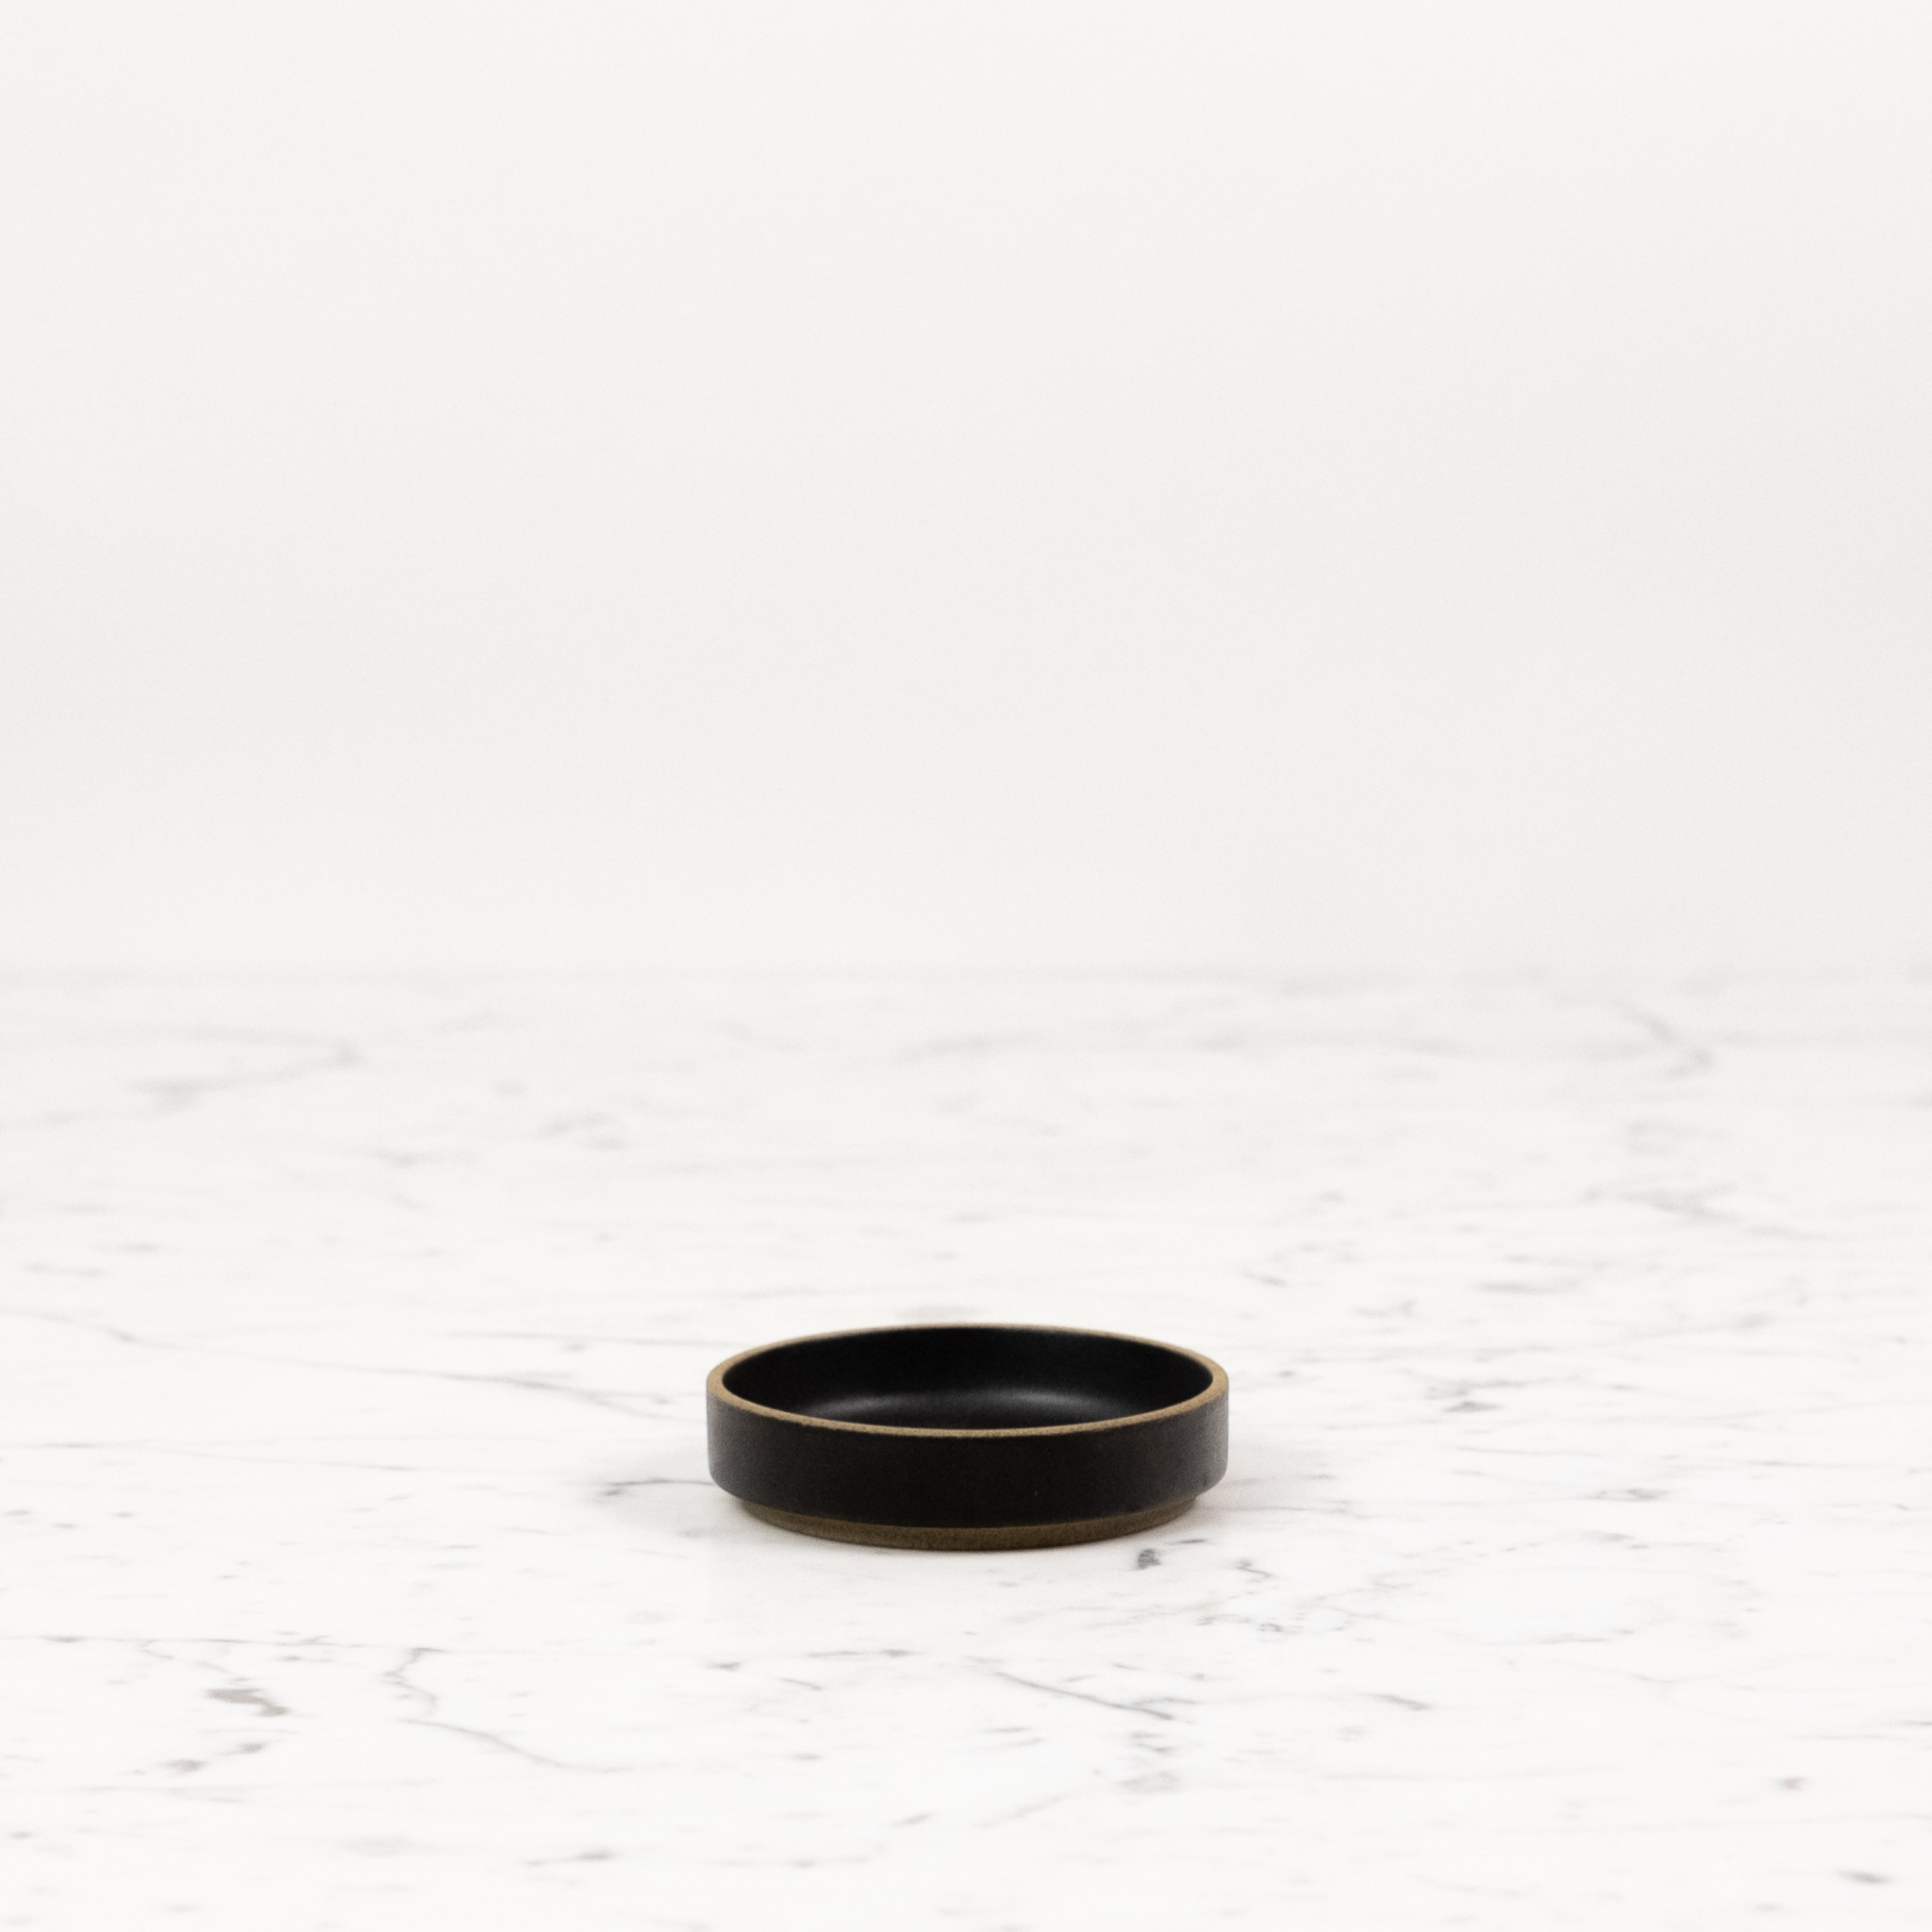 Hasami Porcelain Plate - Tiny - Black - 3 1/4"